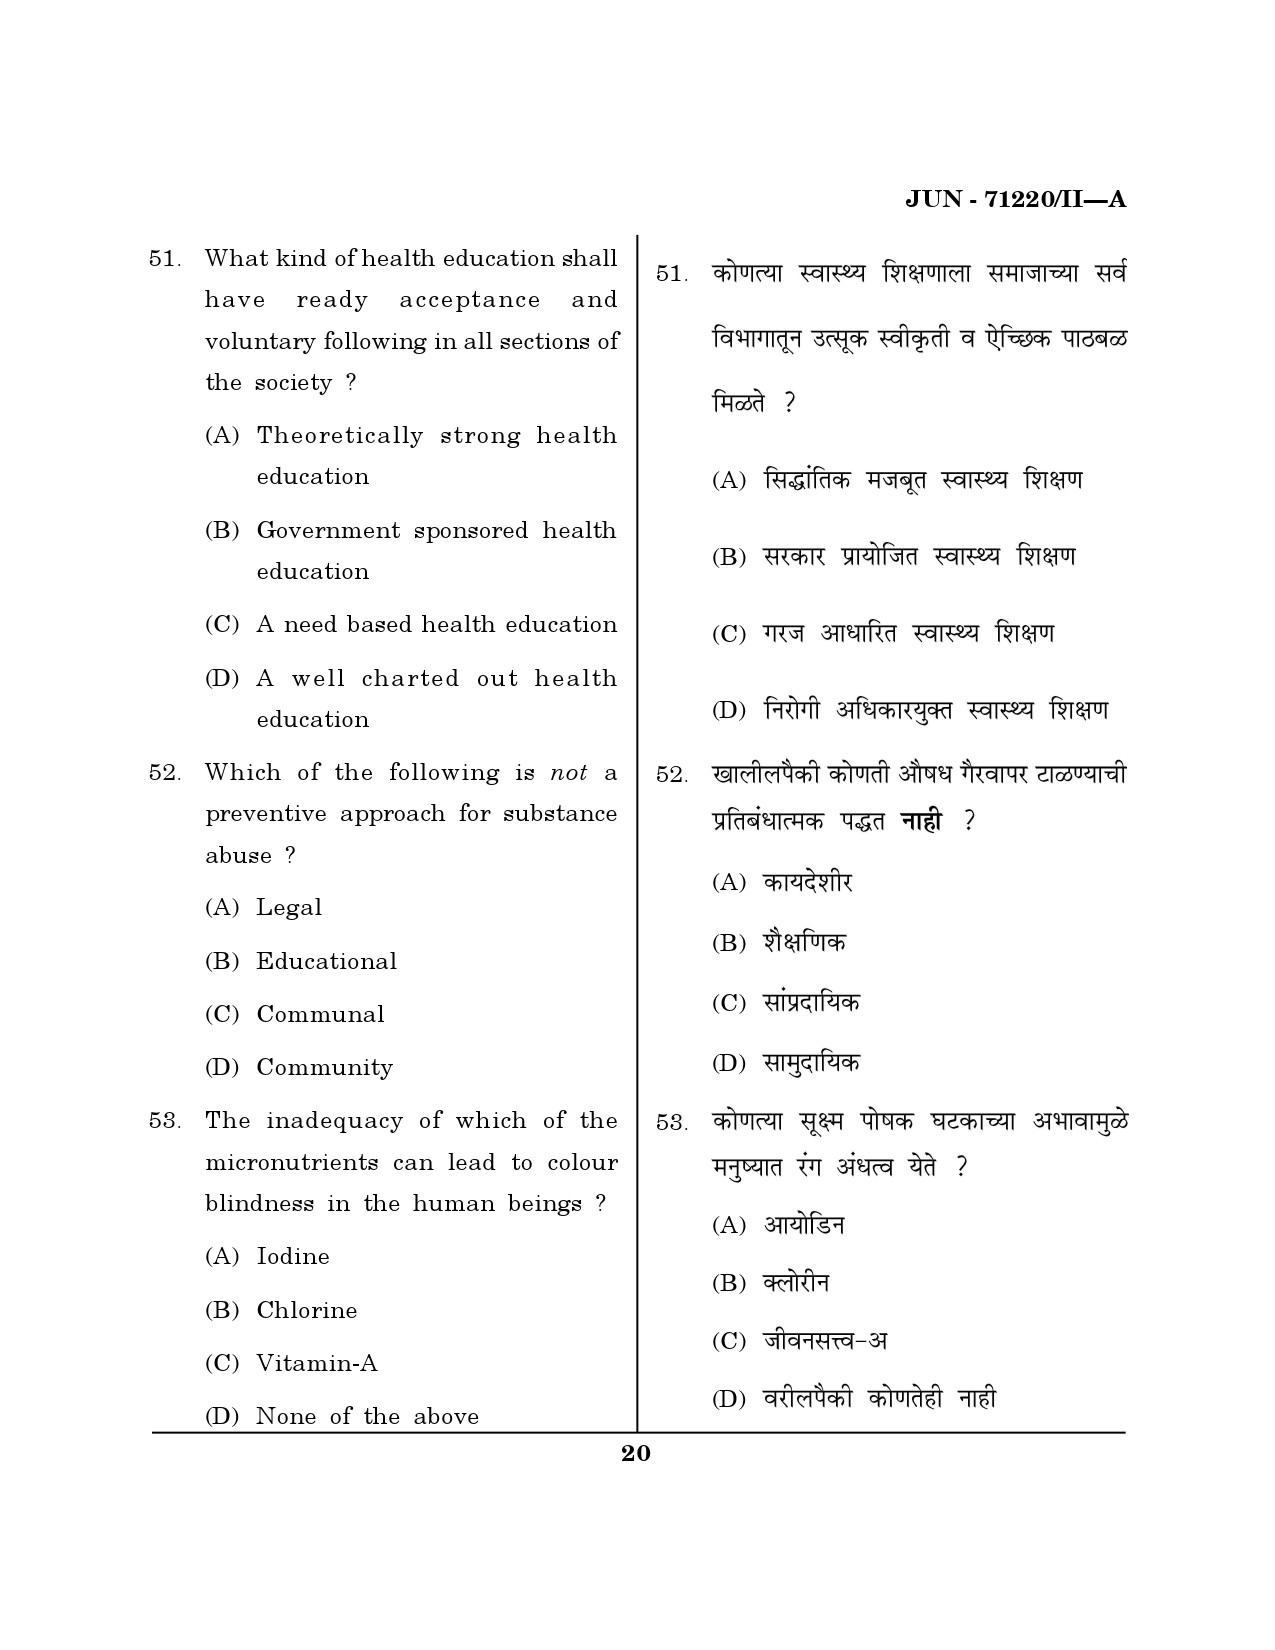 Maharashtra SET Physical Education Question Paper II June 2020 19